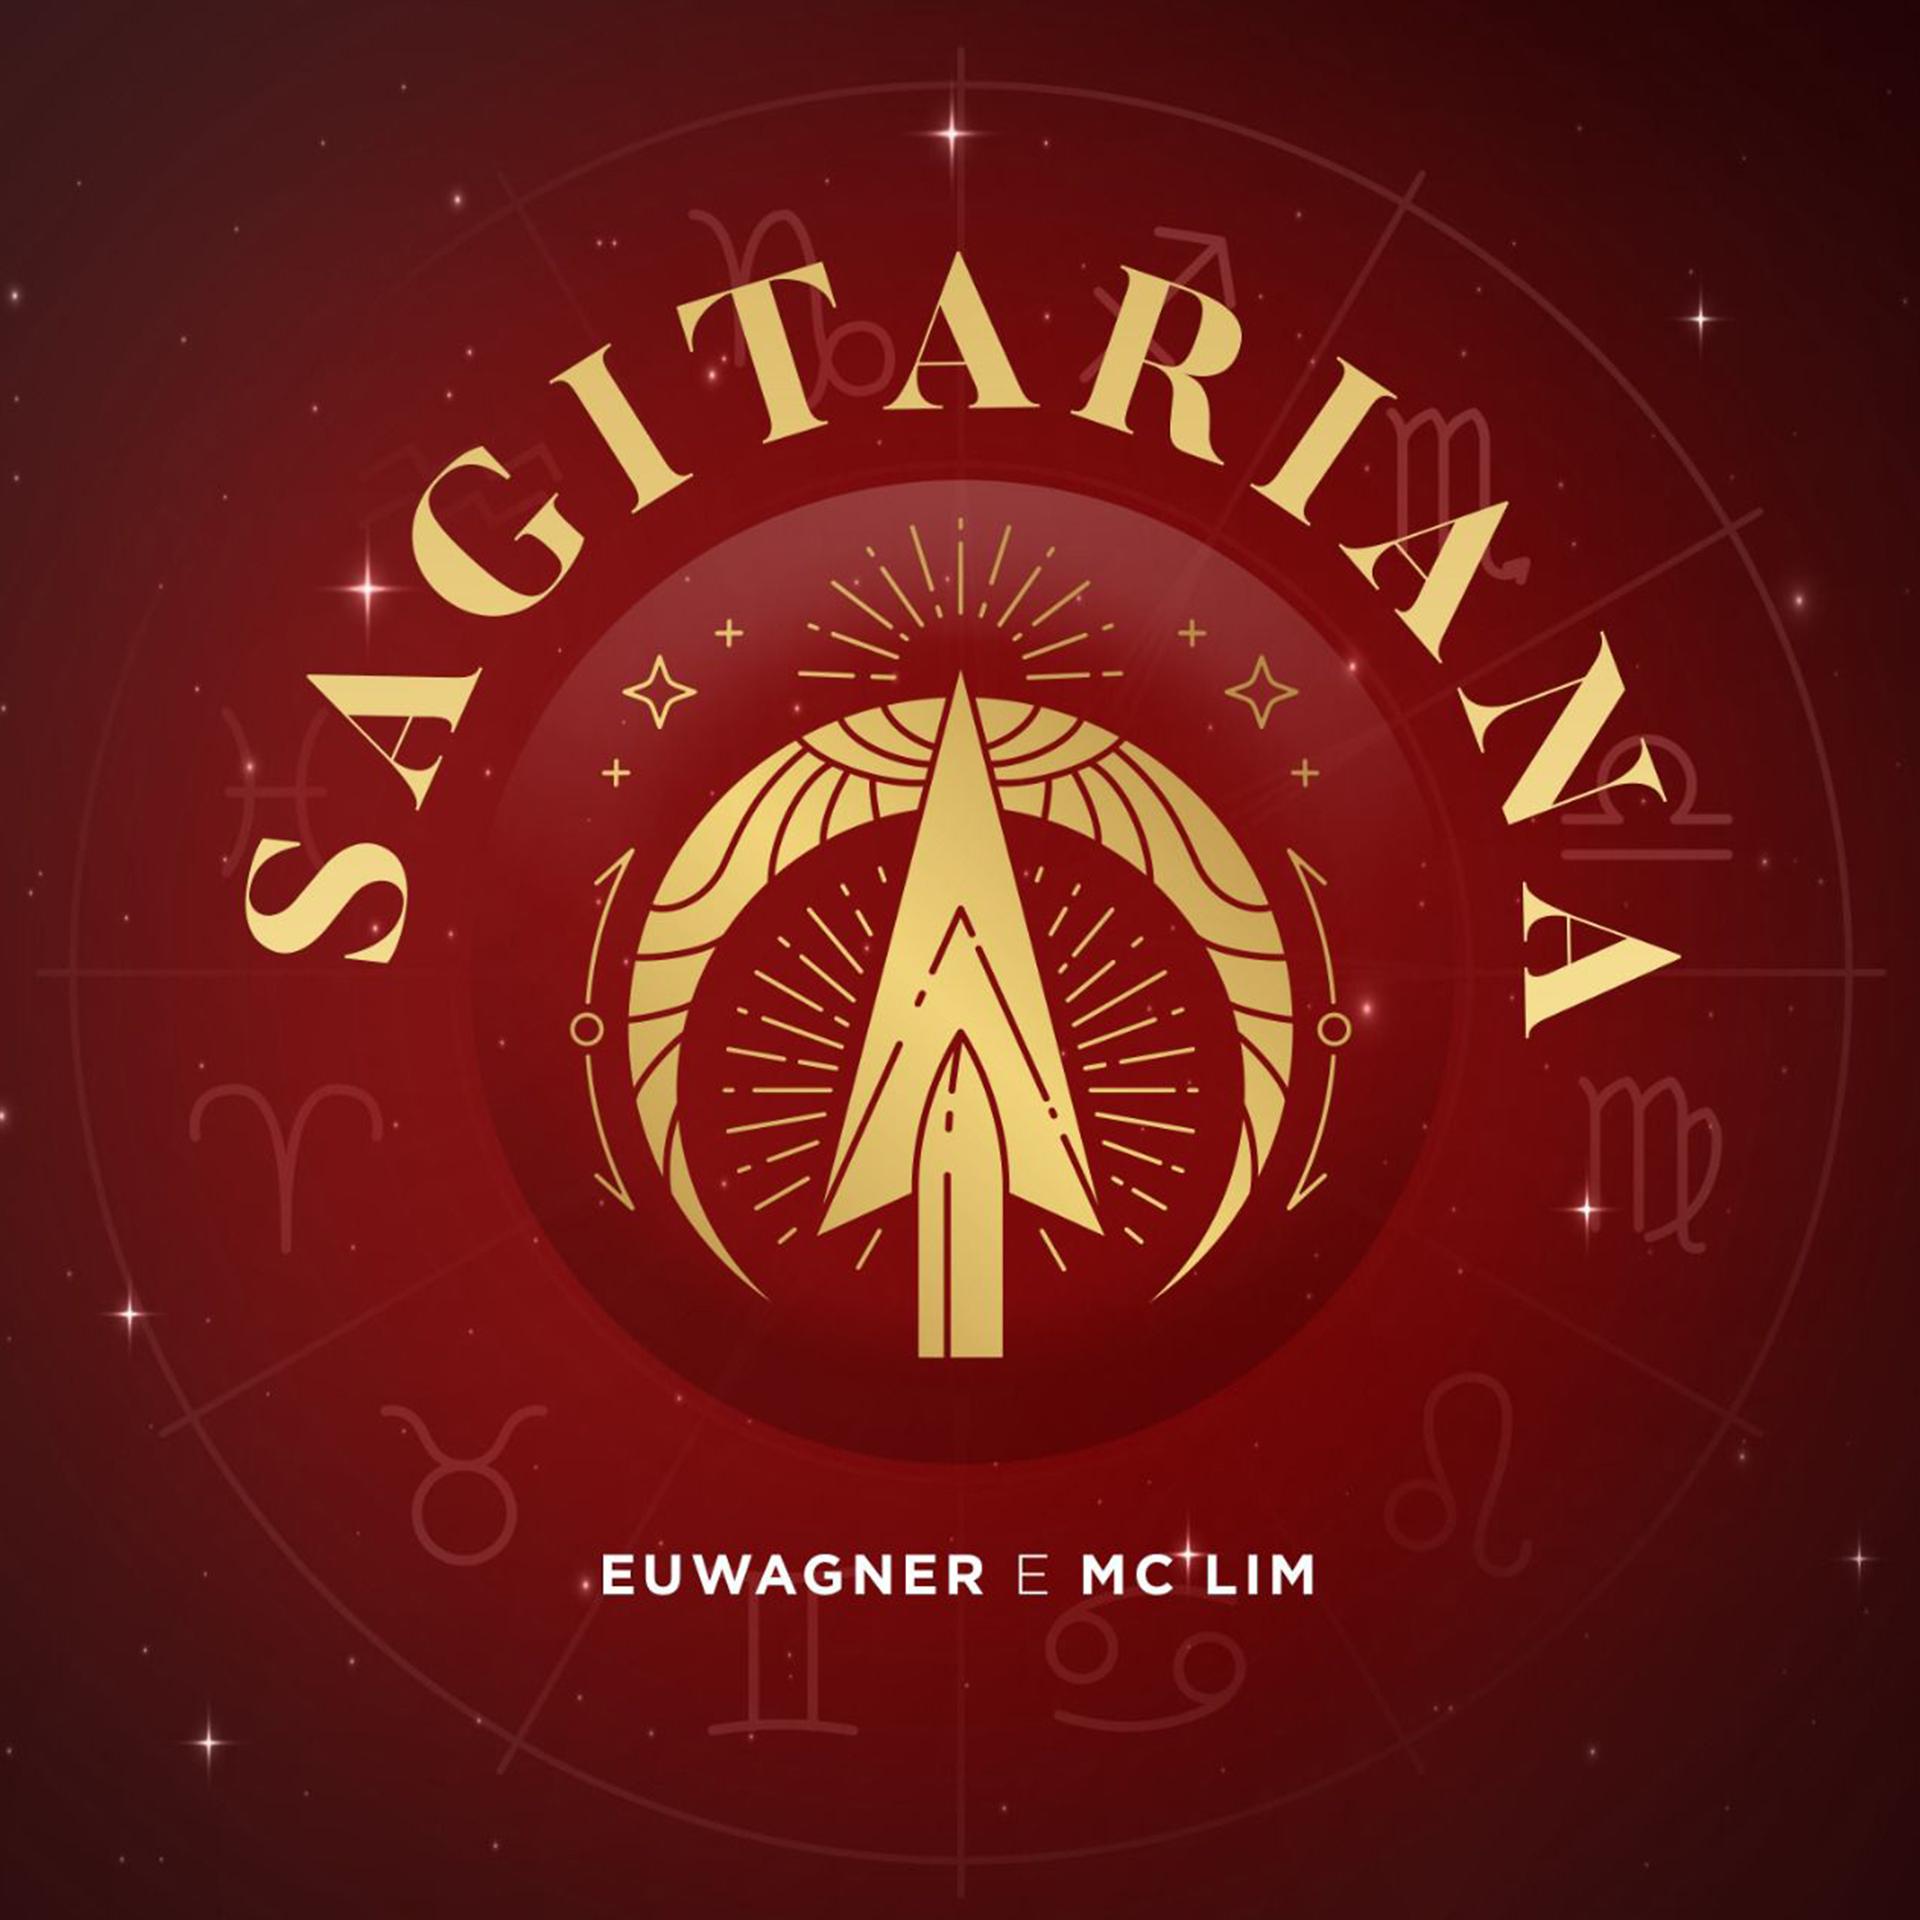 Постер альбома Sagitariana